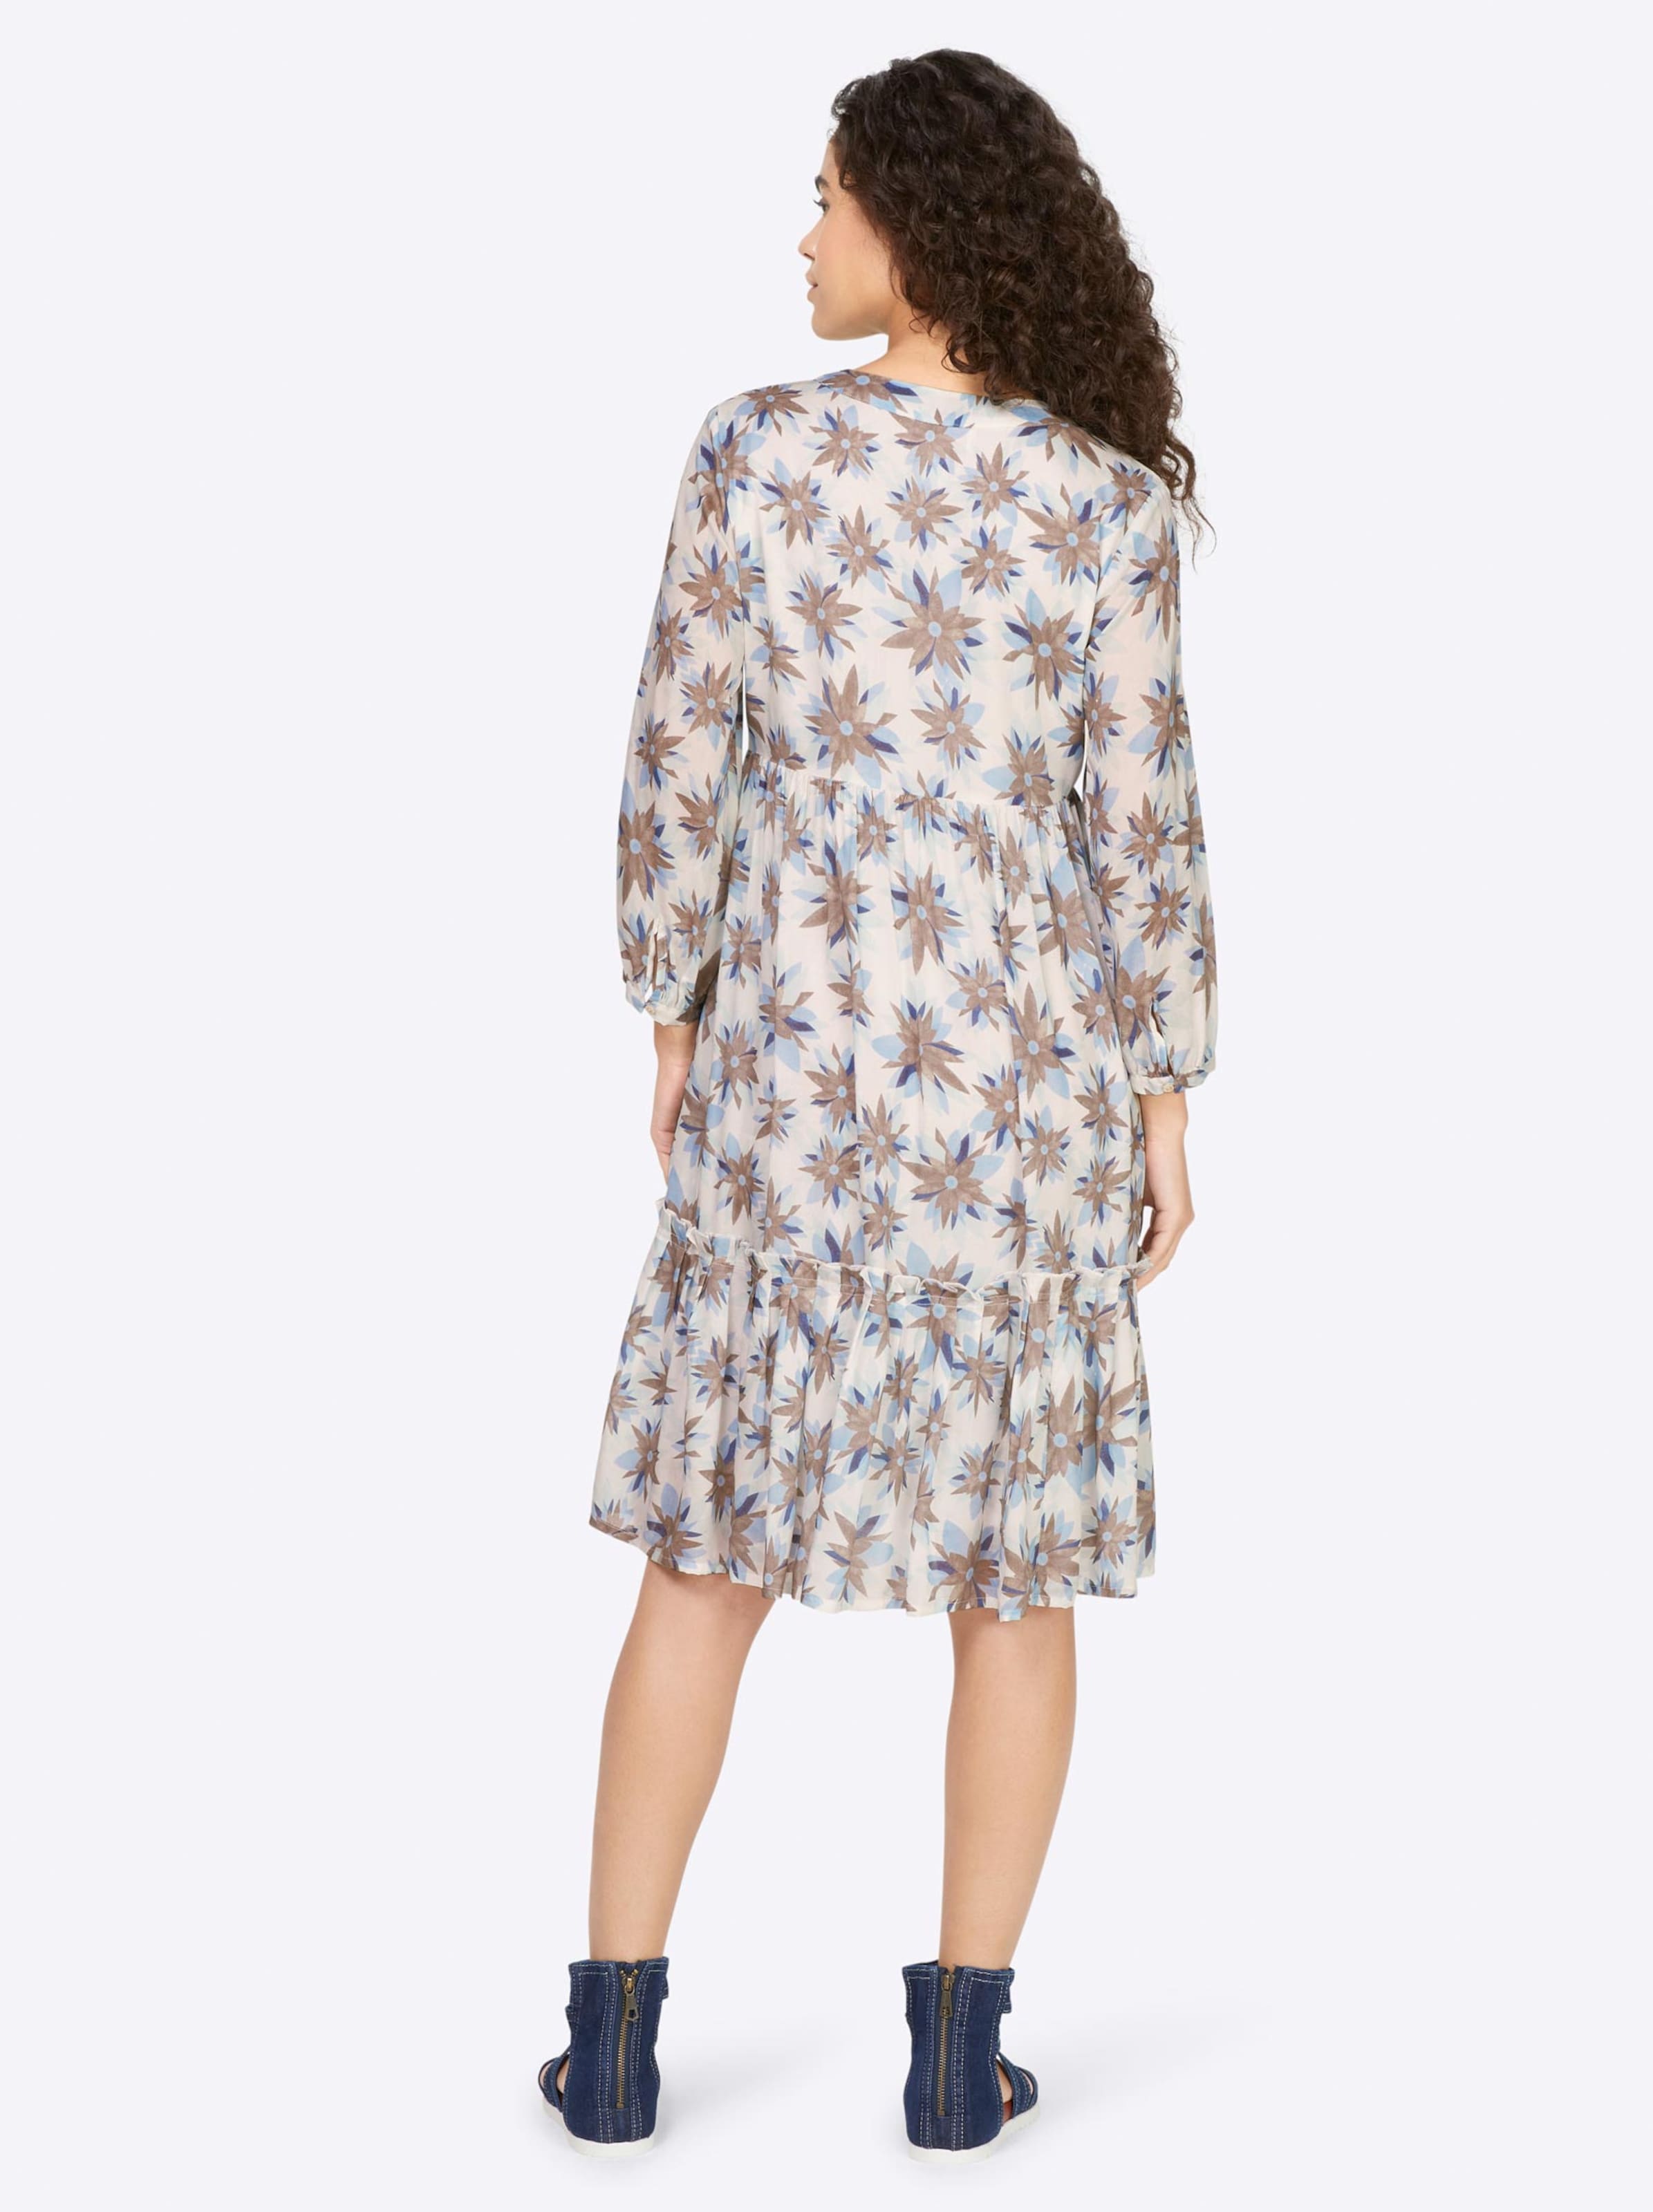 Damenmode Kleider Linea Tesini Druck-Kleid in weiß-himmelblau-gemustert 